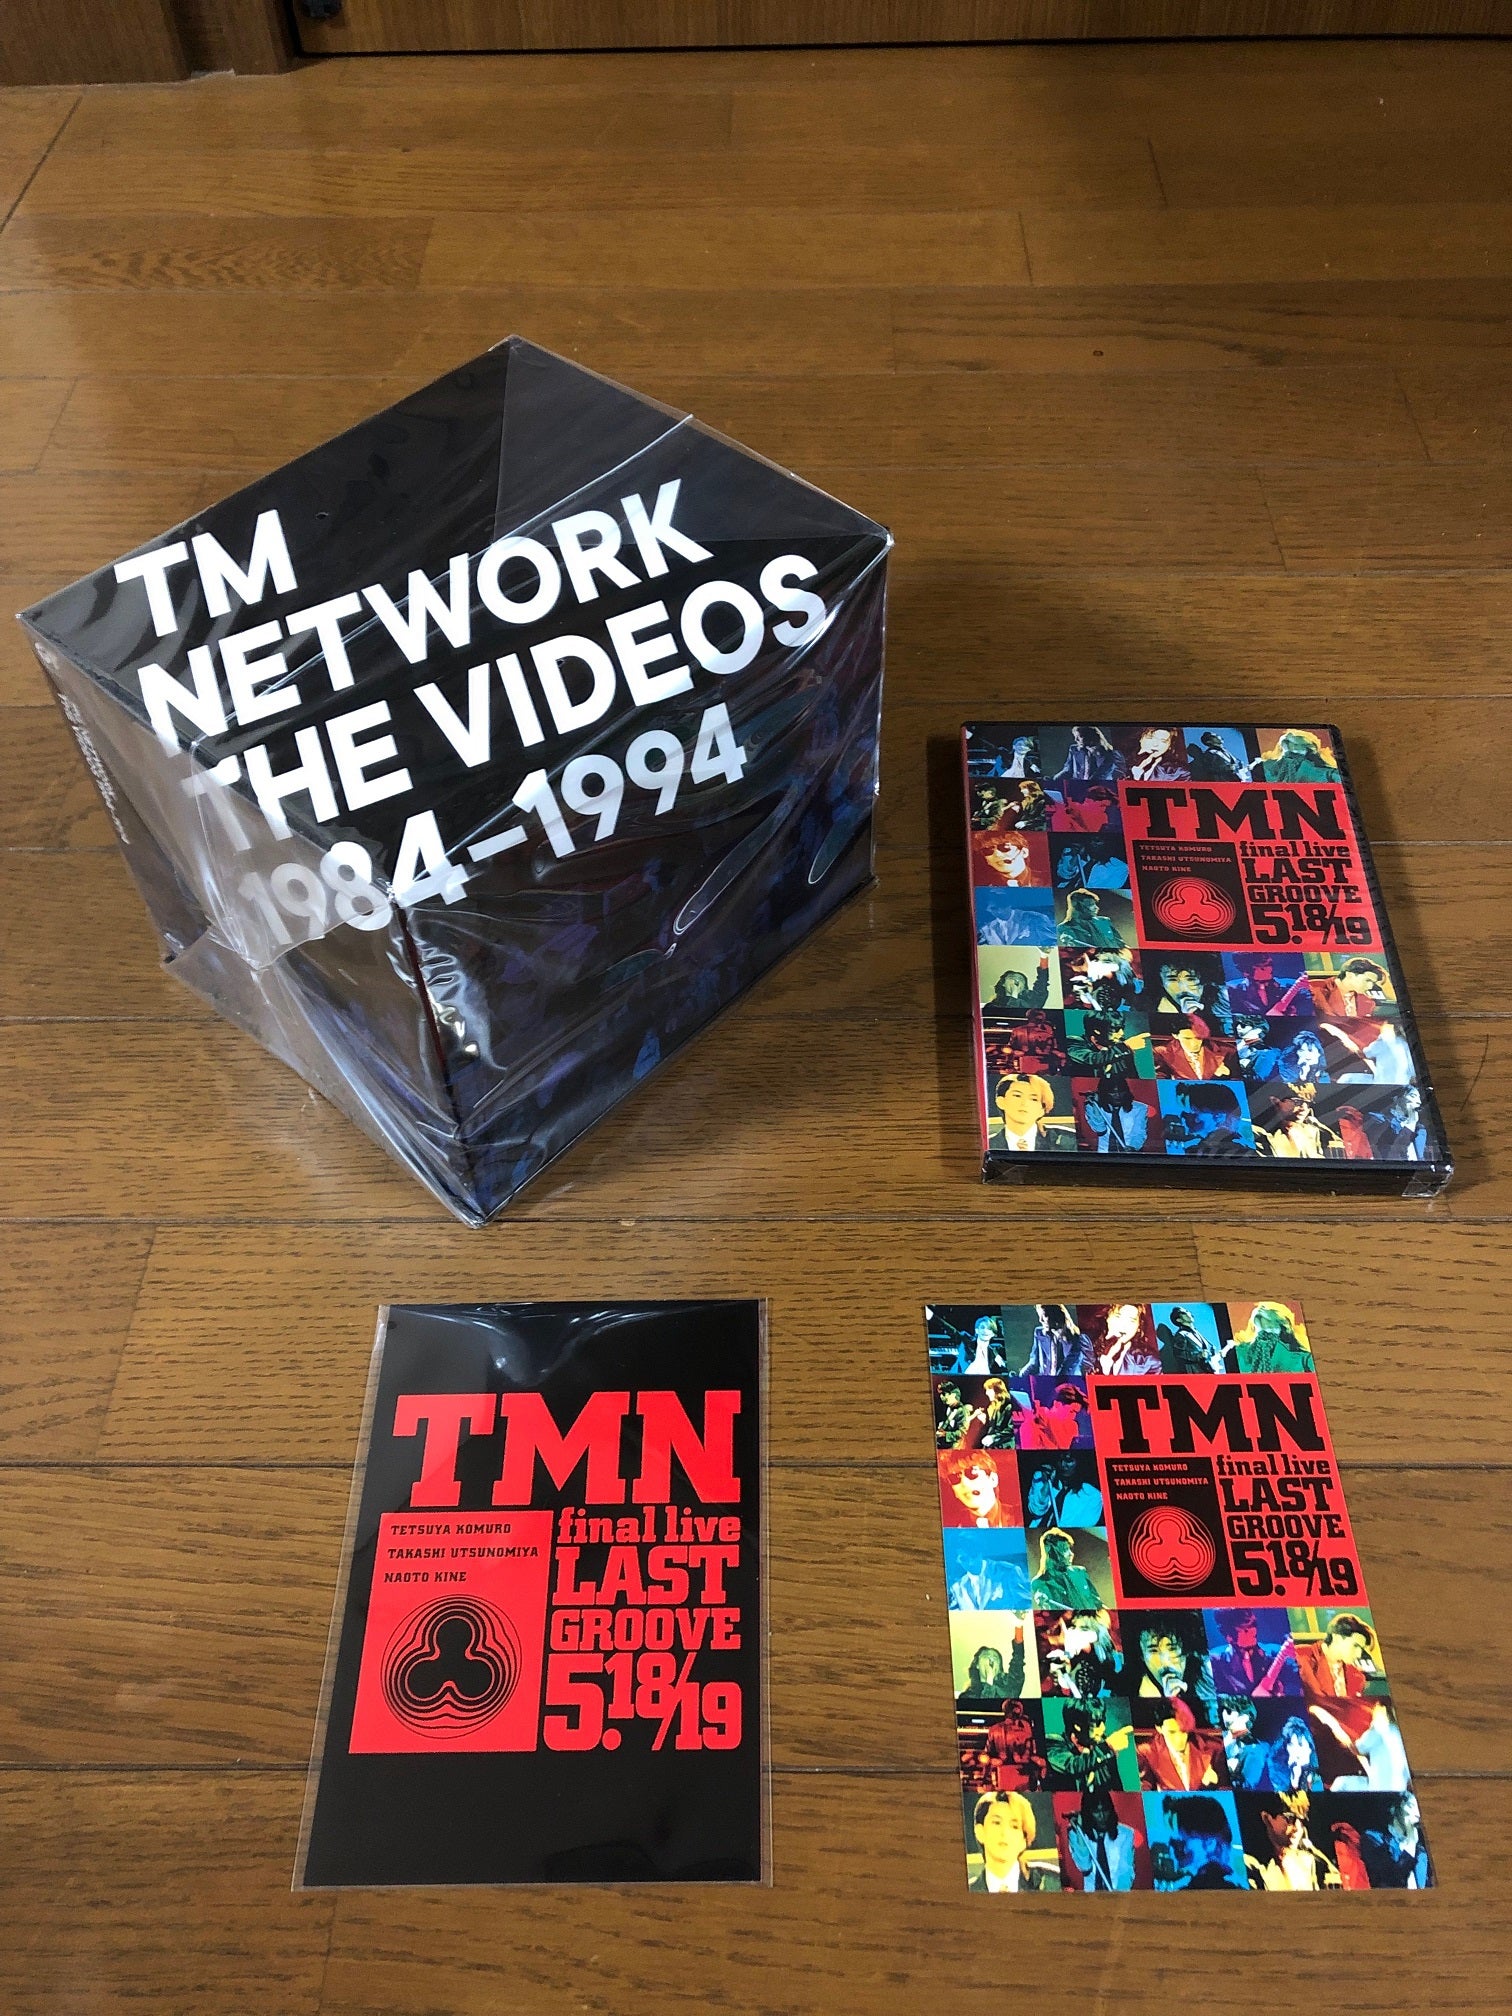 TM NETWORK THE VIDEOS 1984-1994 | siep-enterprise.com